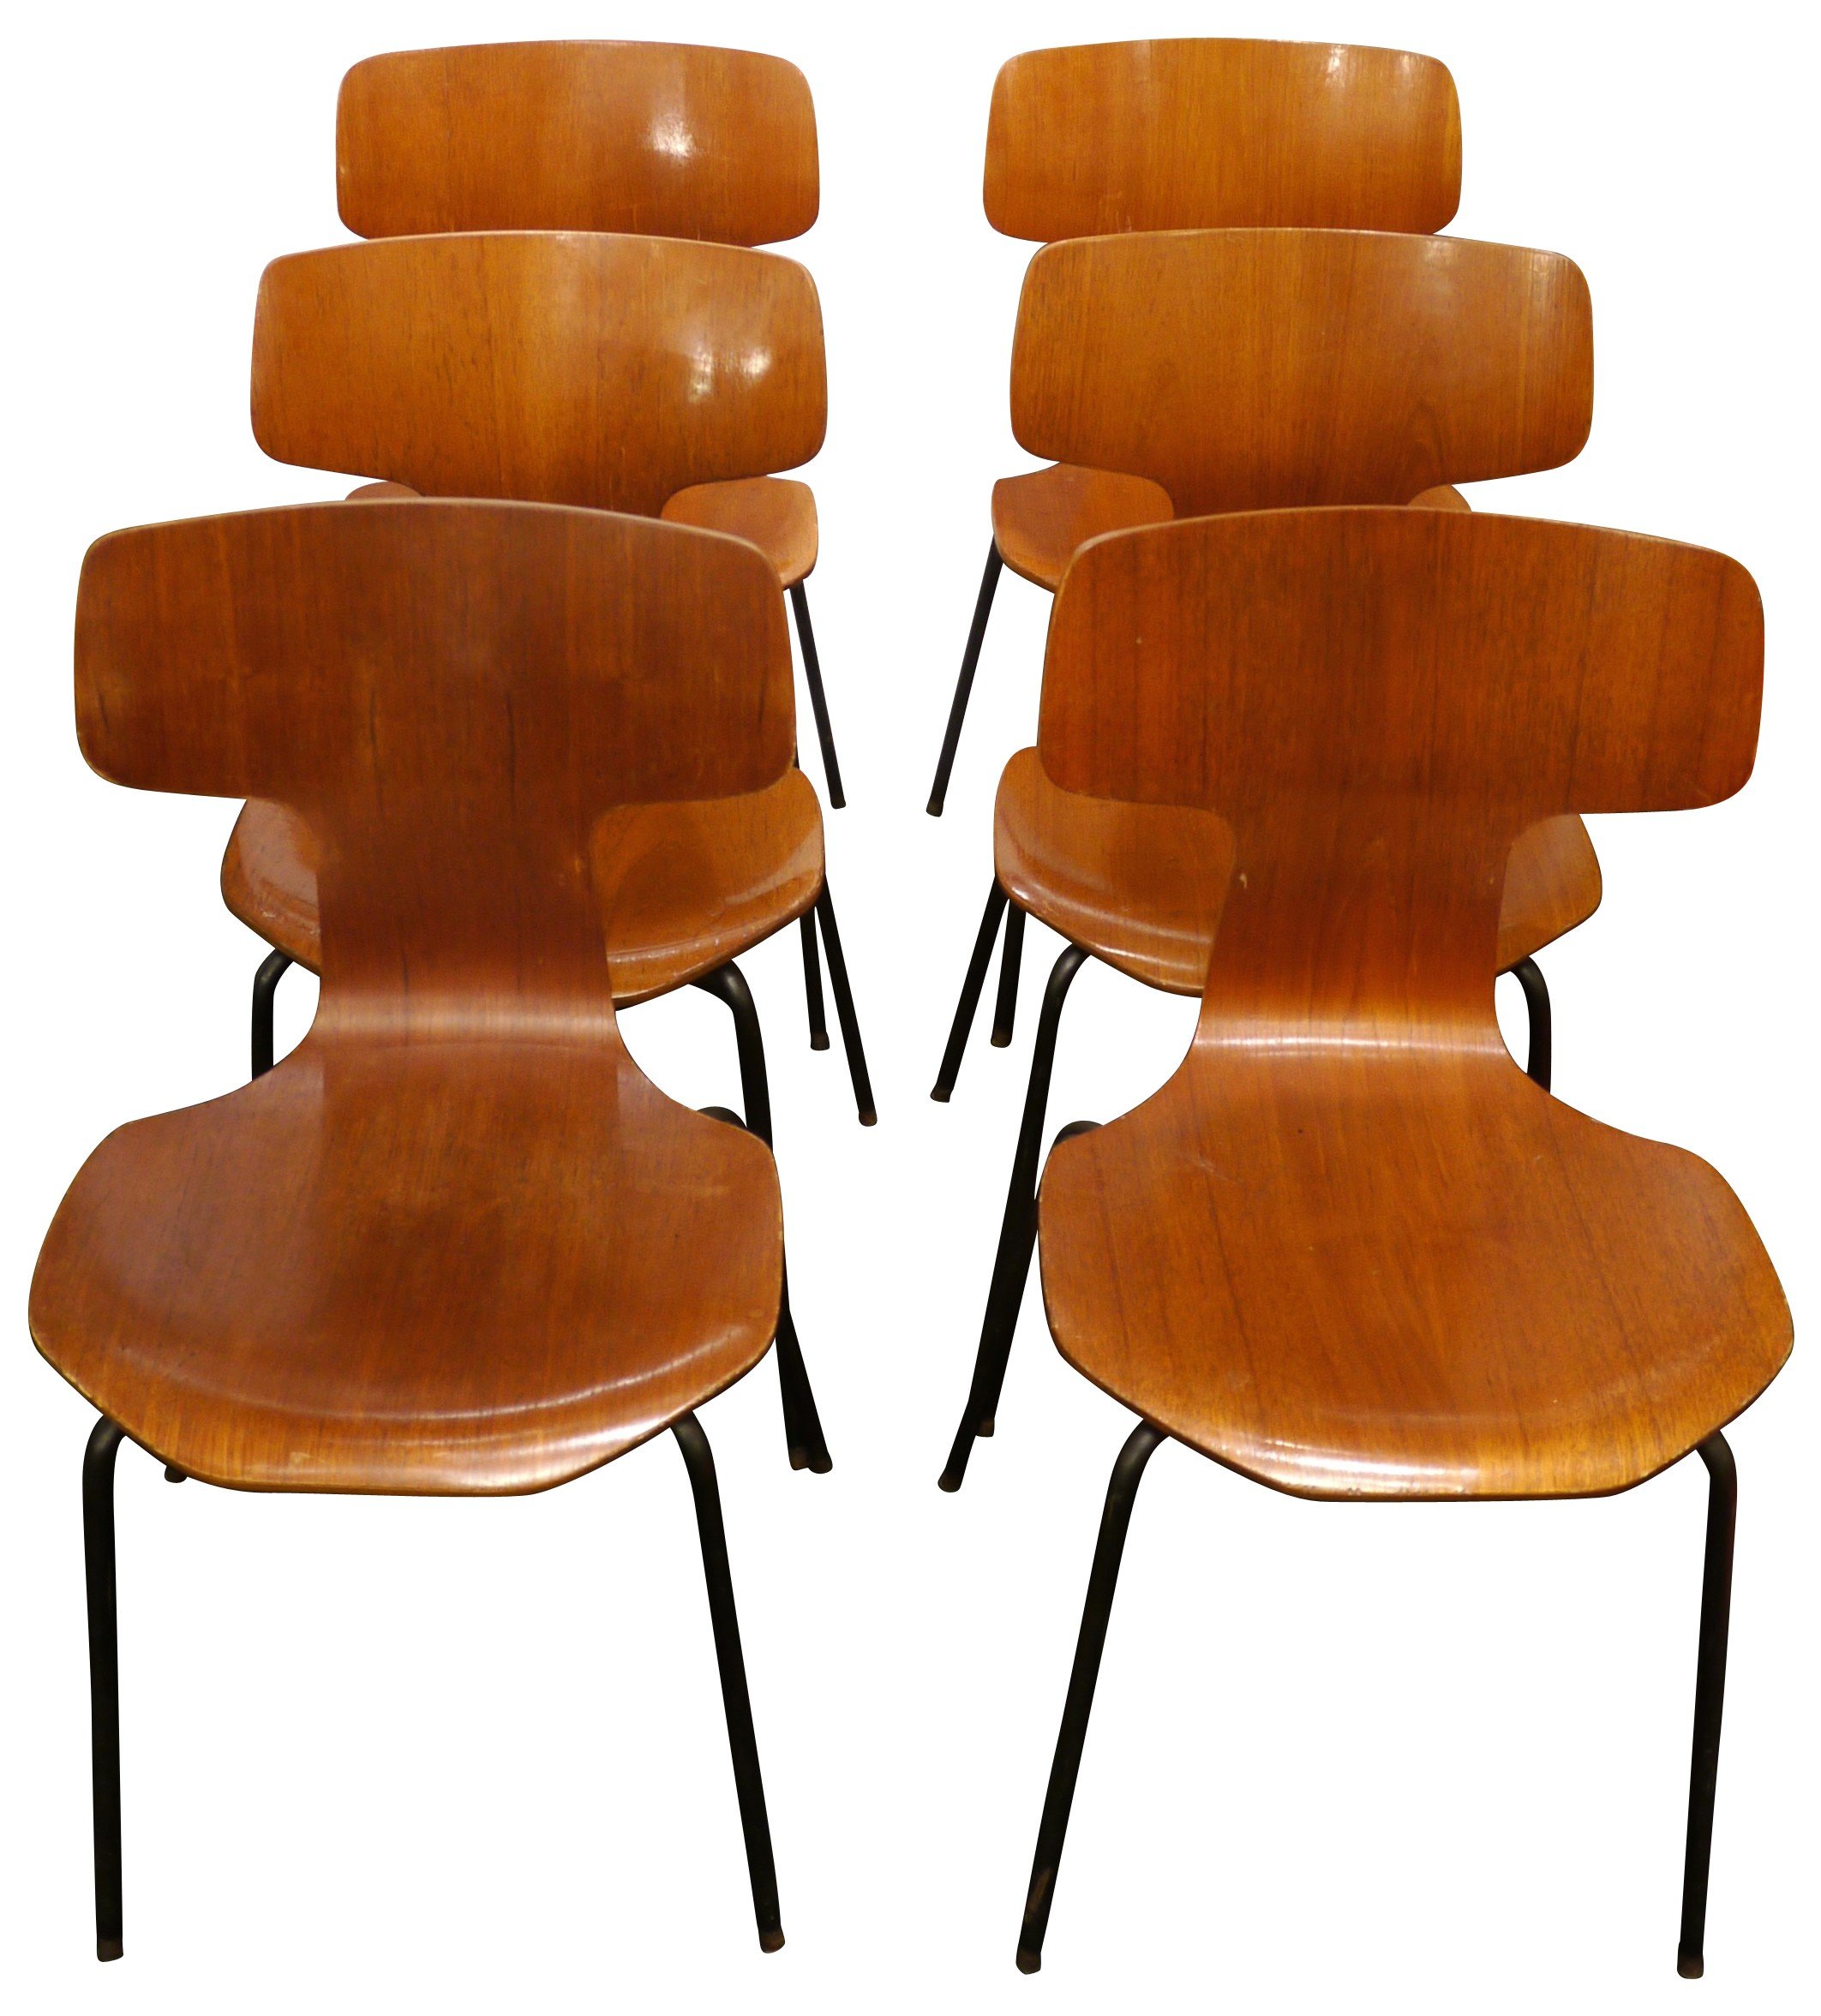 6 chairs "Hammer" Arne JACOBSEN 60 Design Market